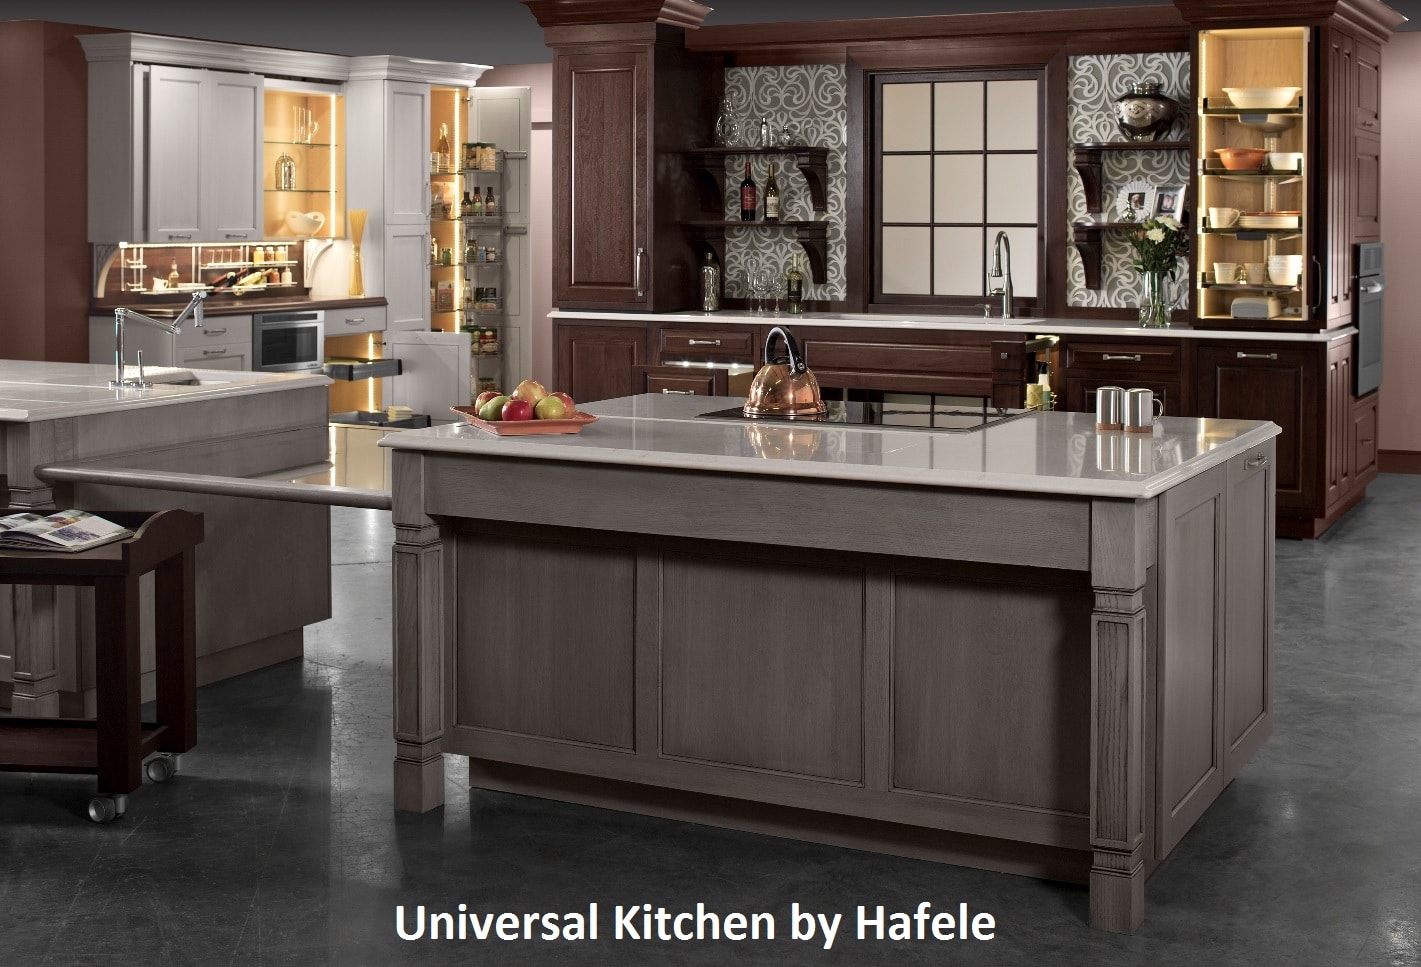 12 Handy Kitchen Remodeling Tips